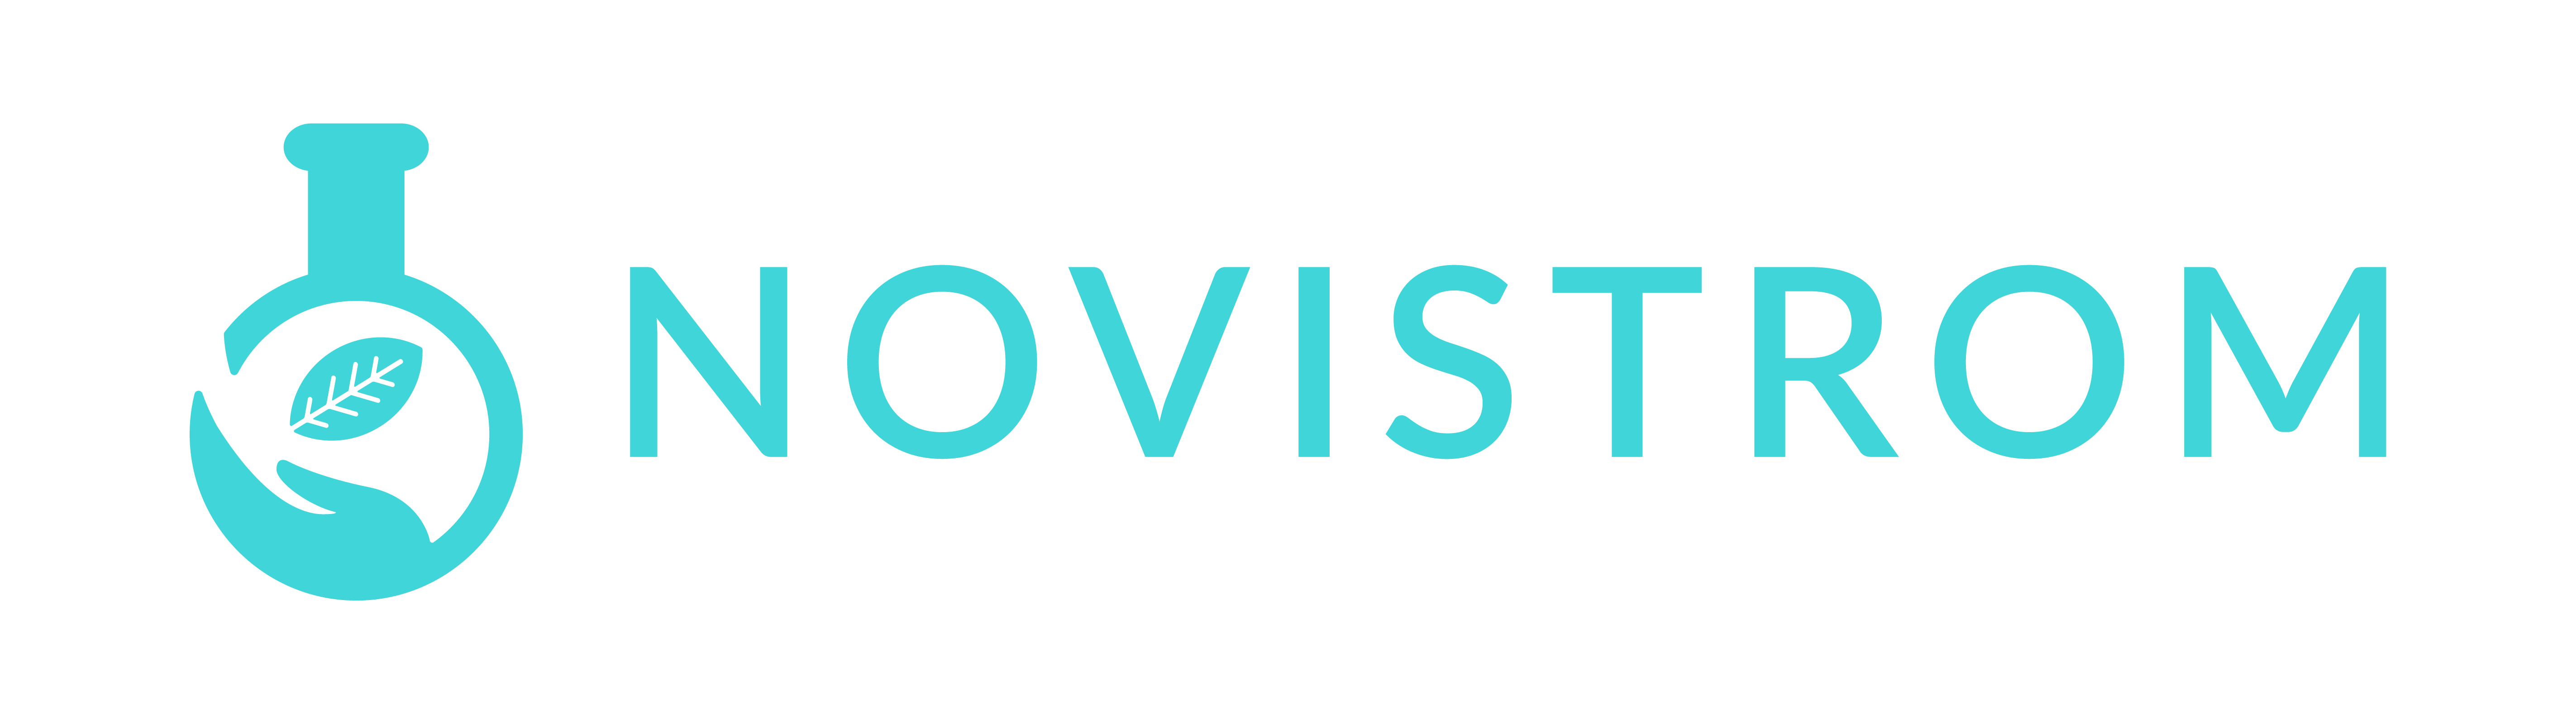 Novistrom Logo in colour